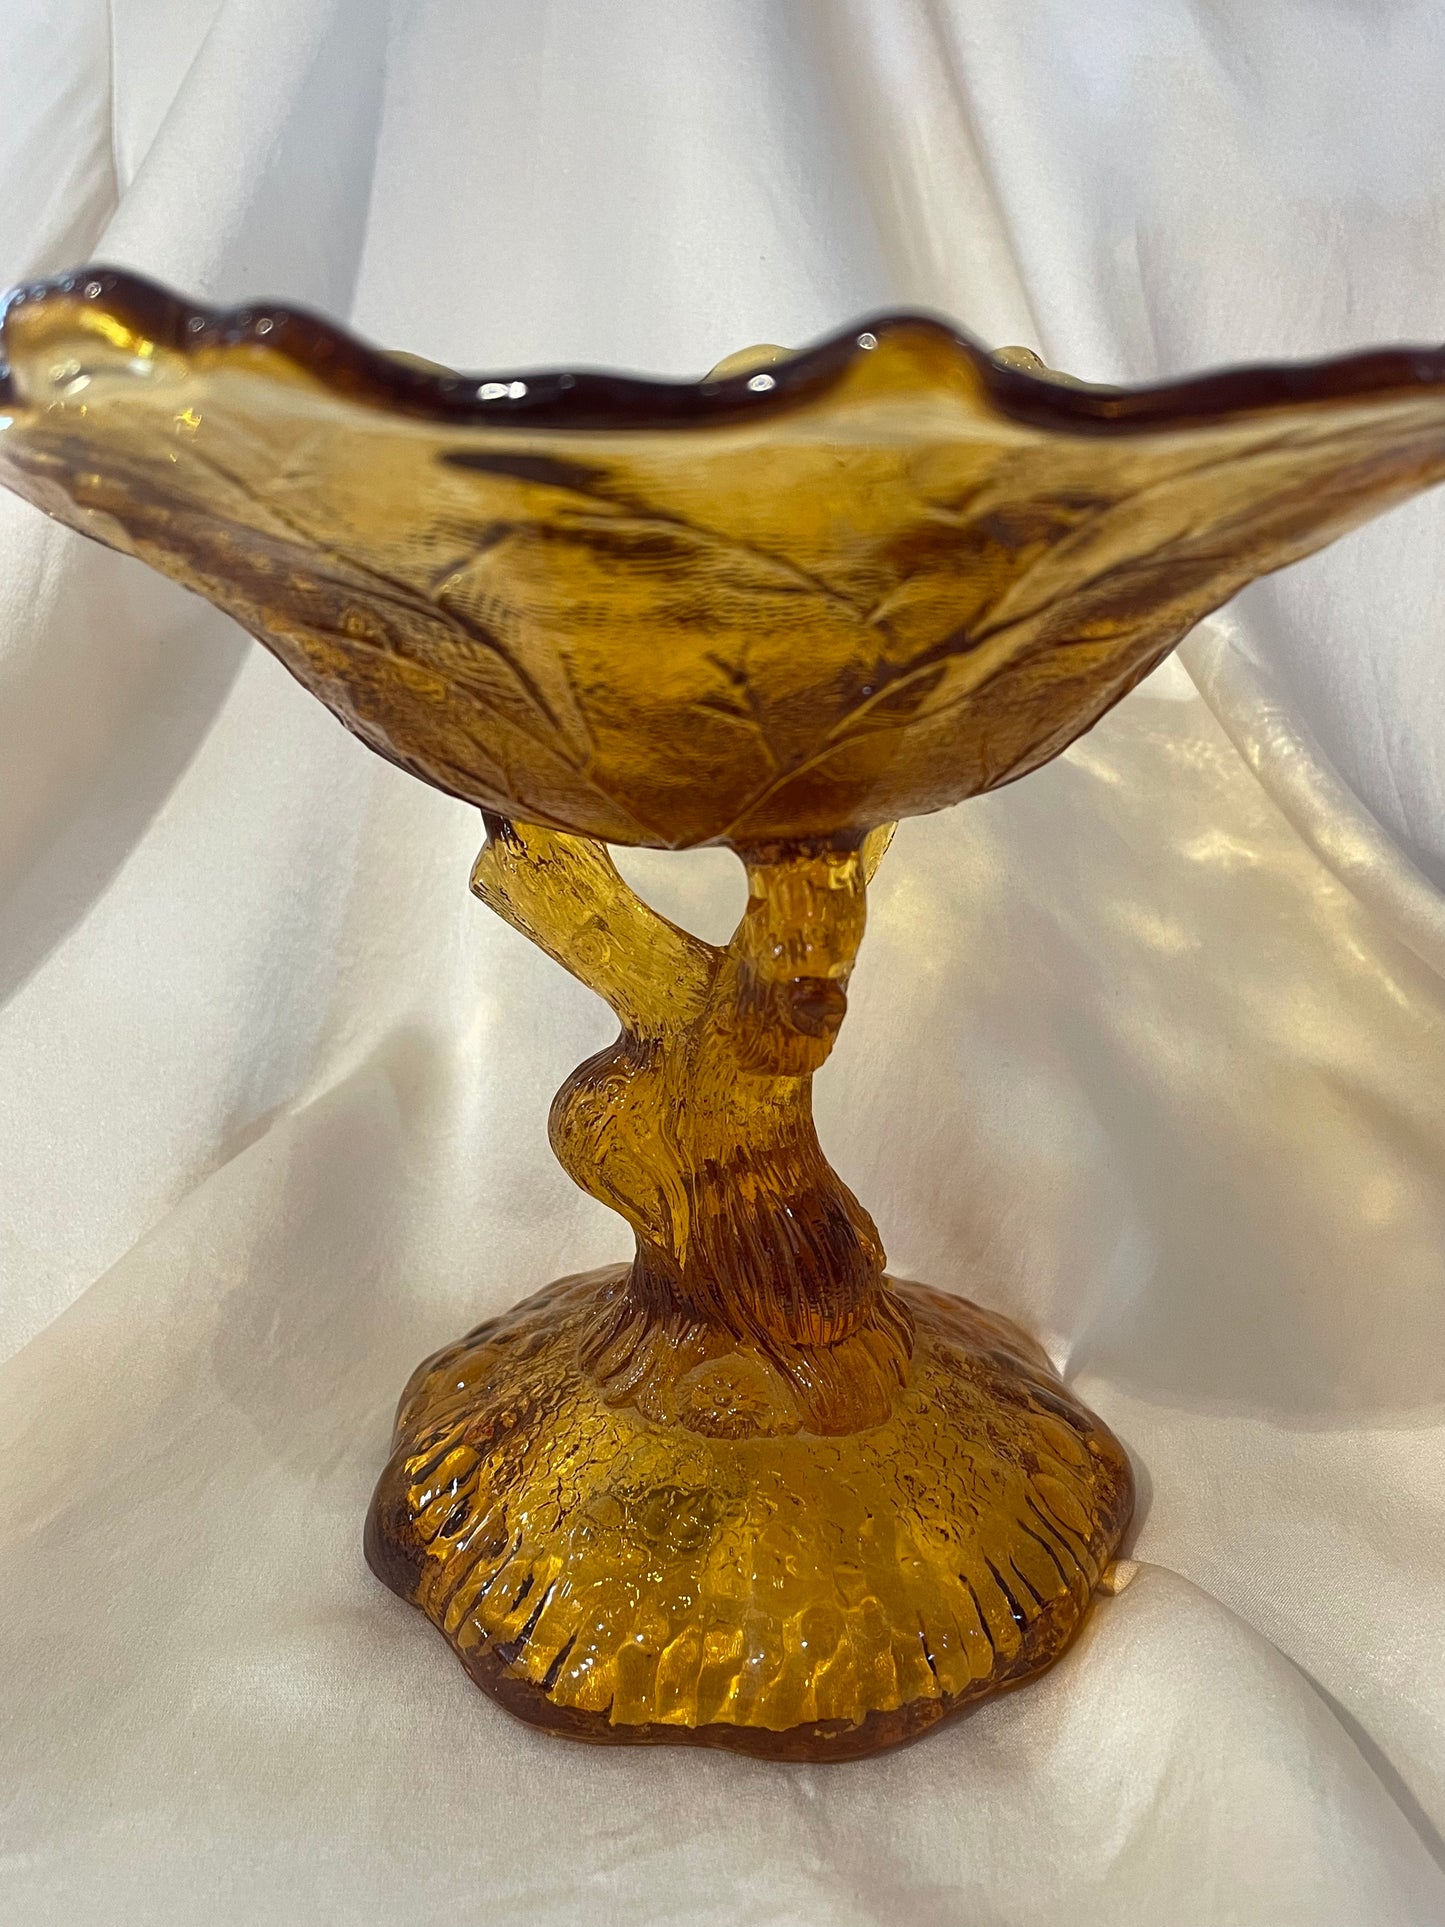 Amber Glass Pedestal Dish